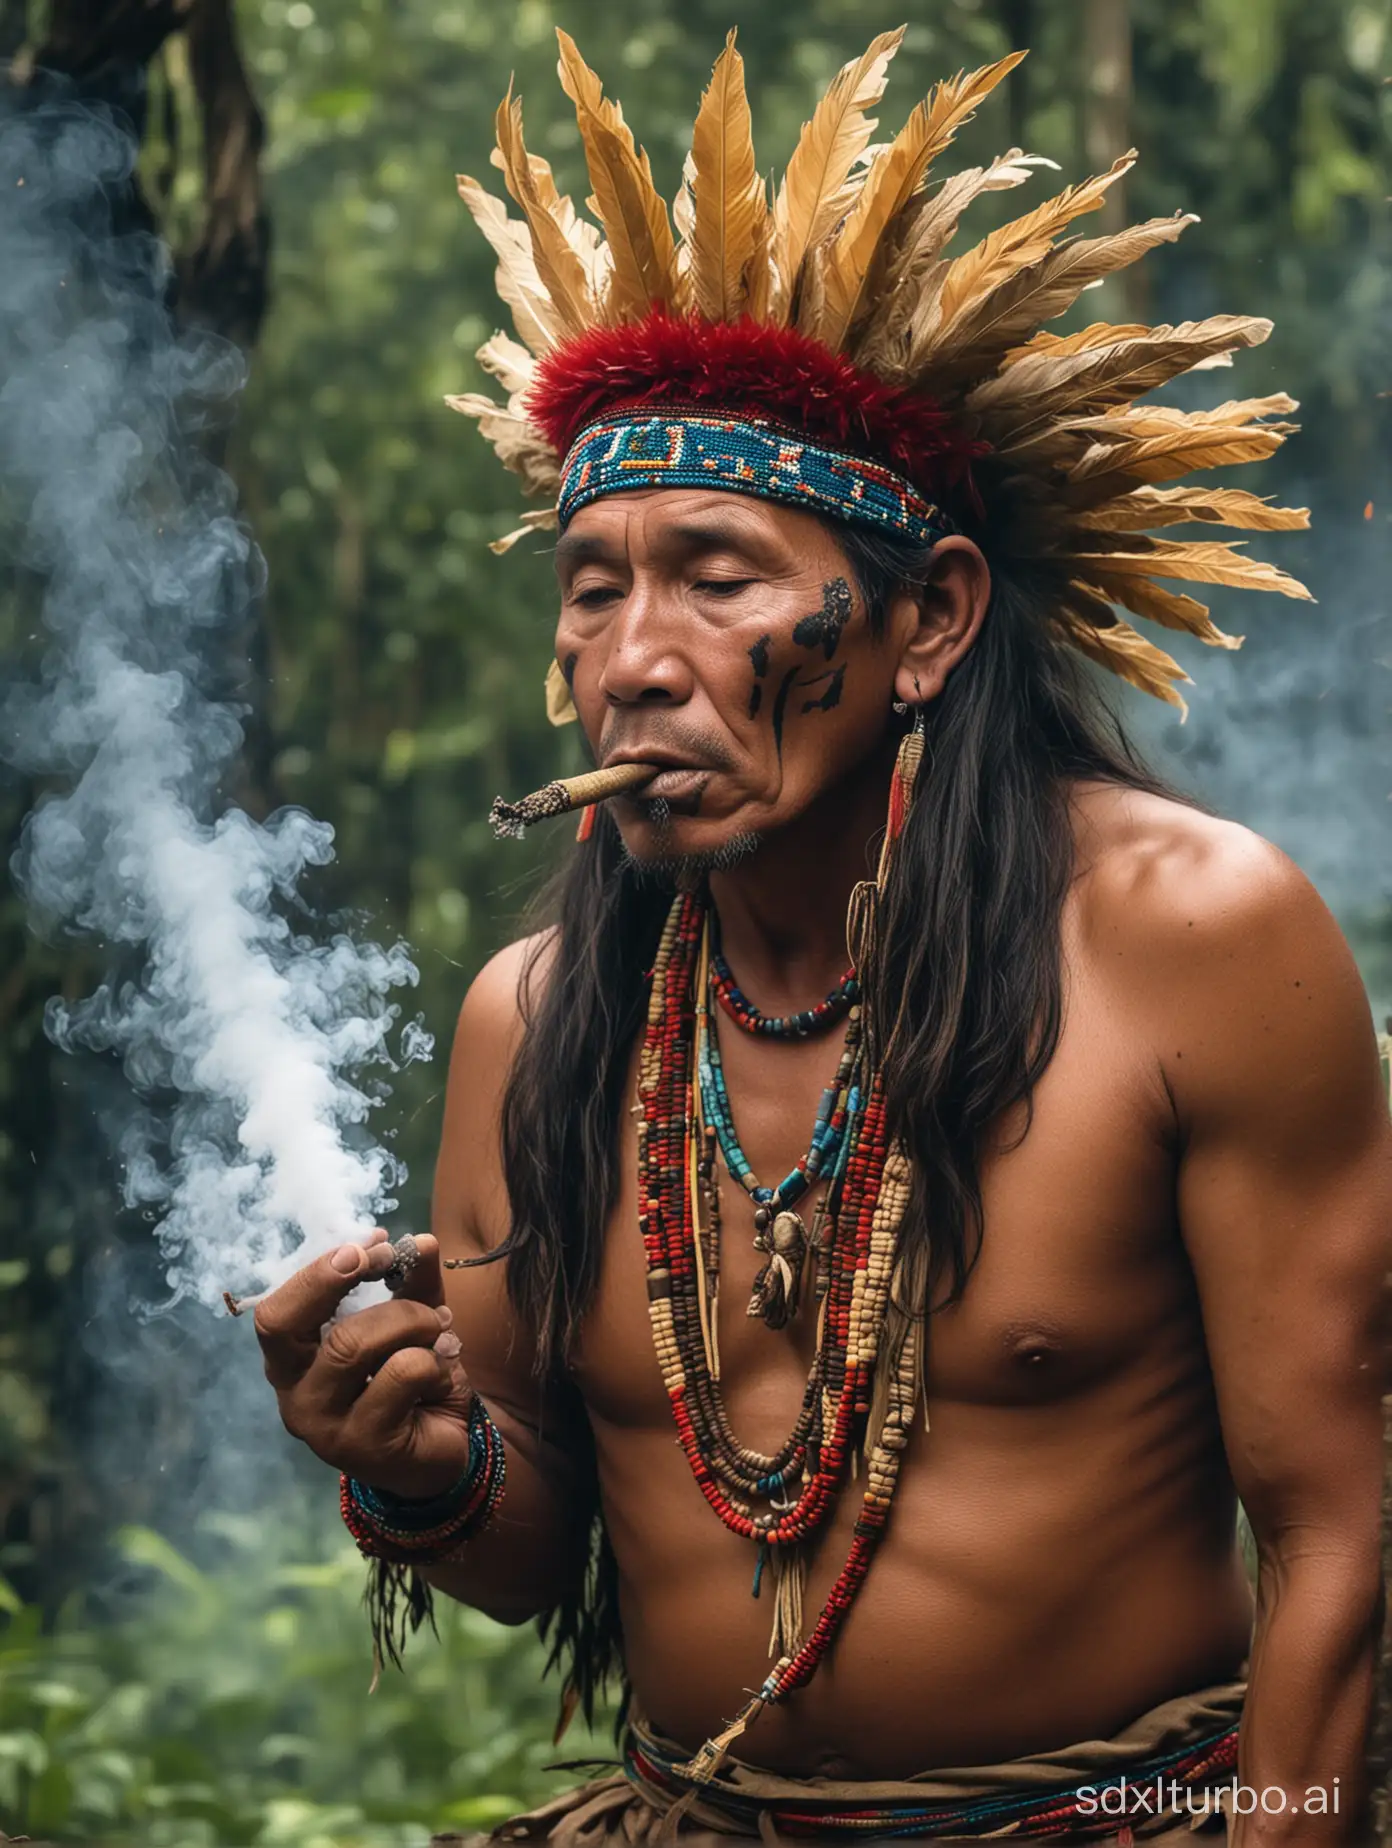 Peruvian-Shaman-Performing-Tobacco-Smoke-Ritual-in-Amazon-Rainforest